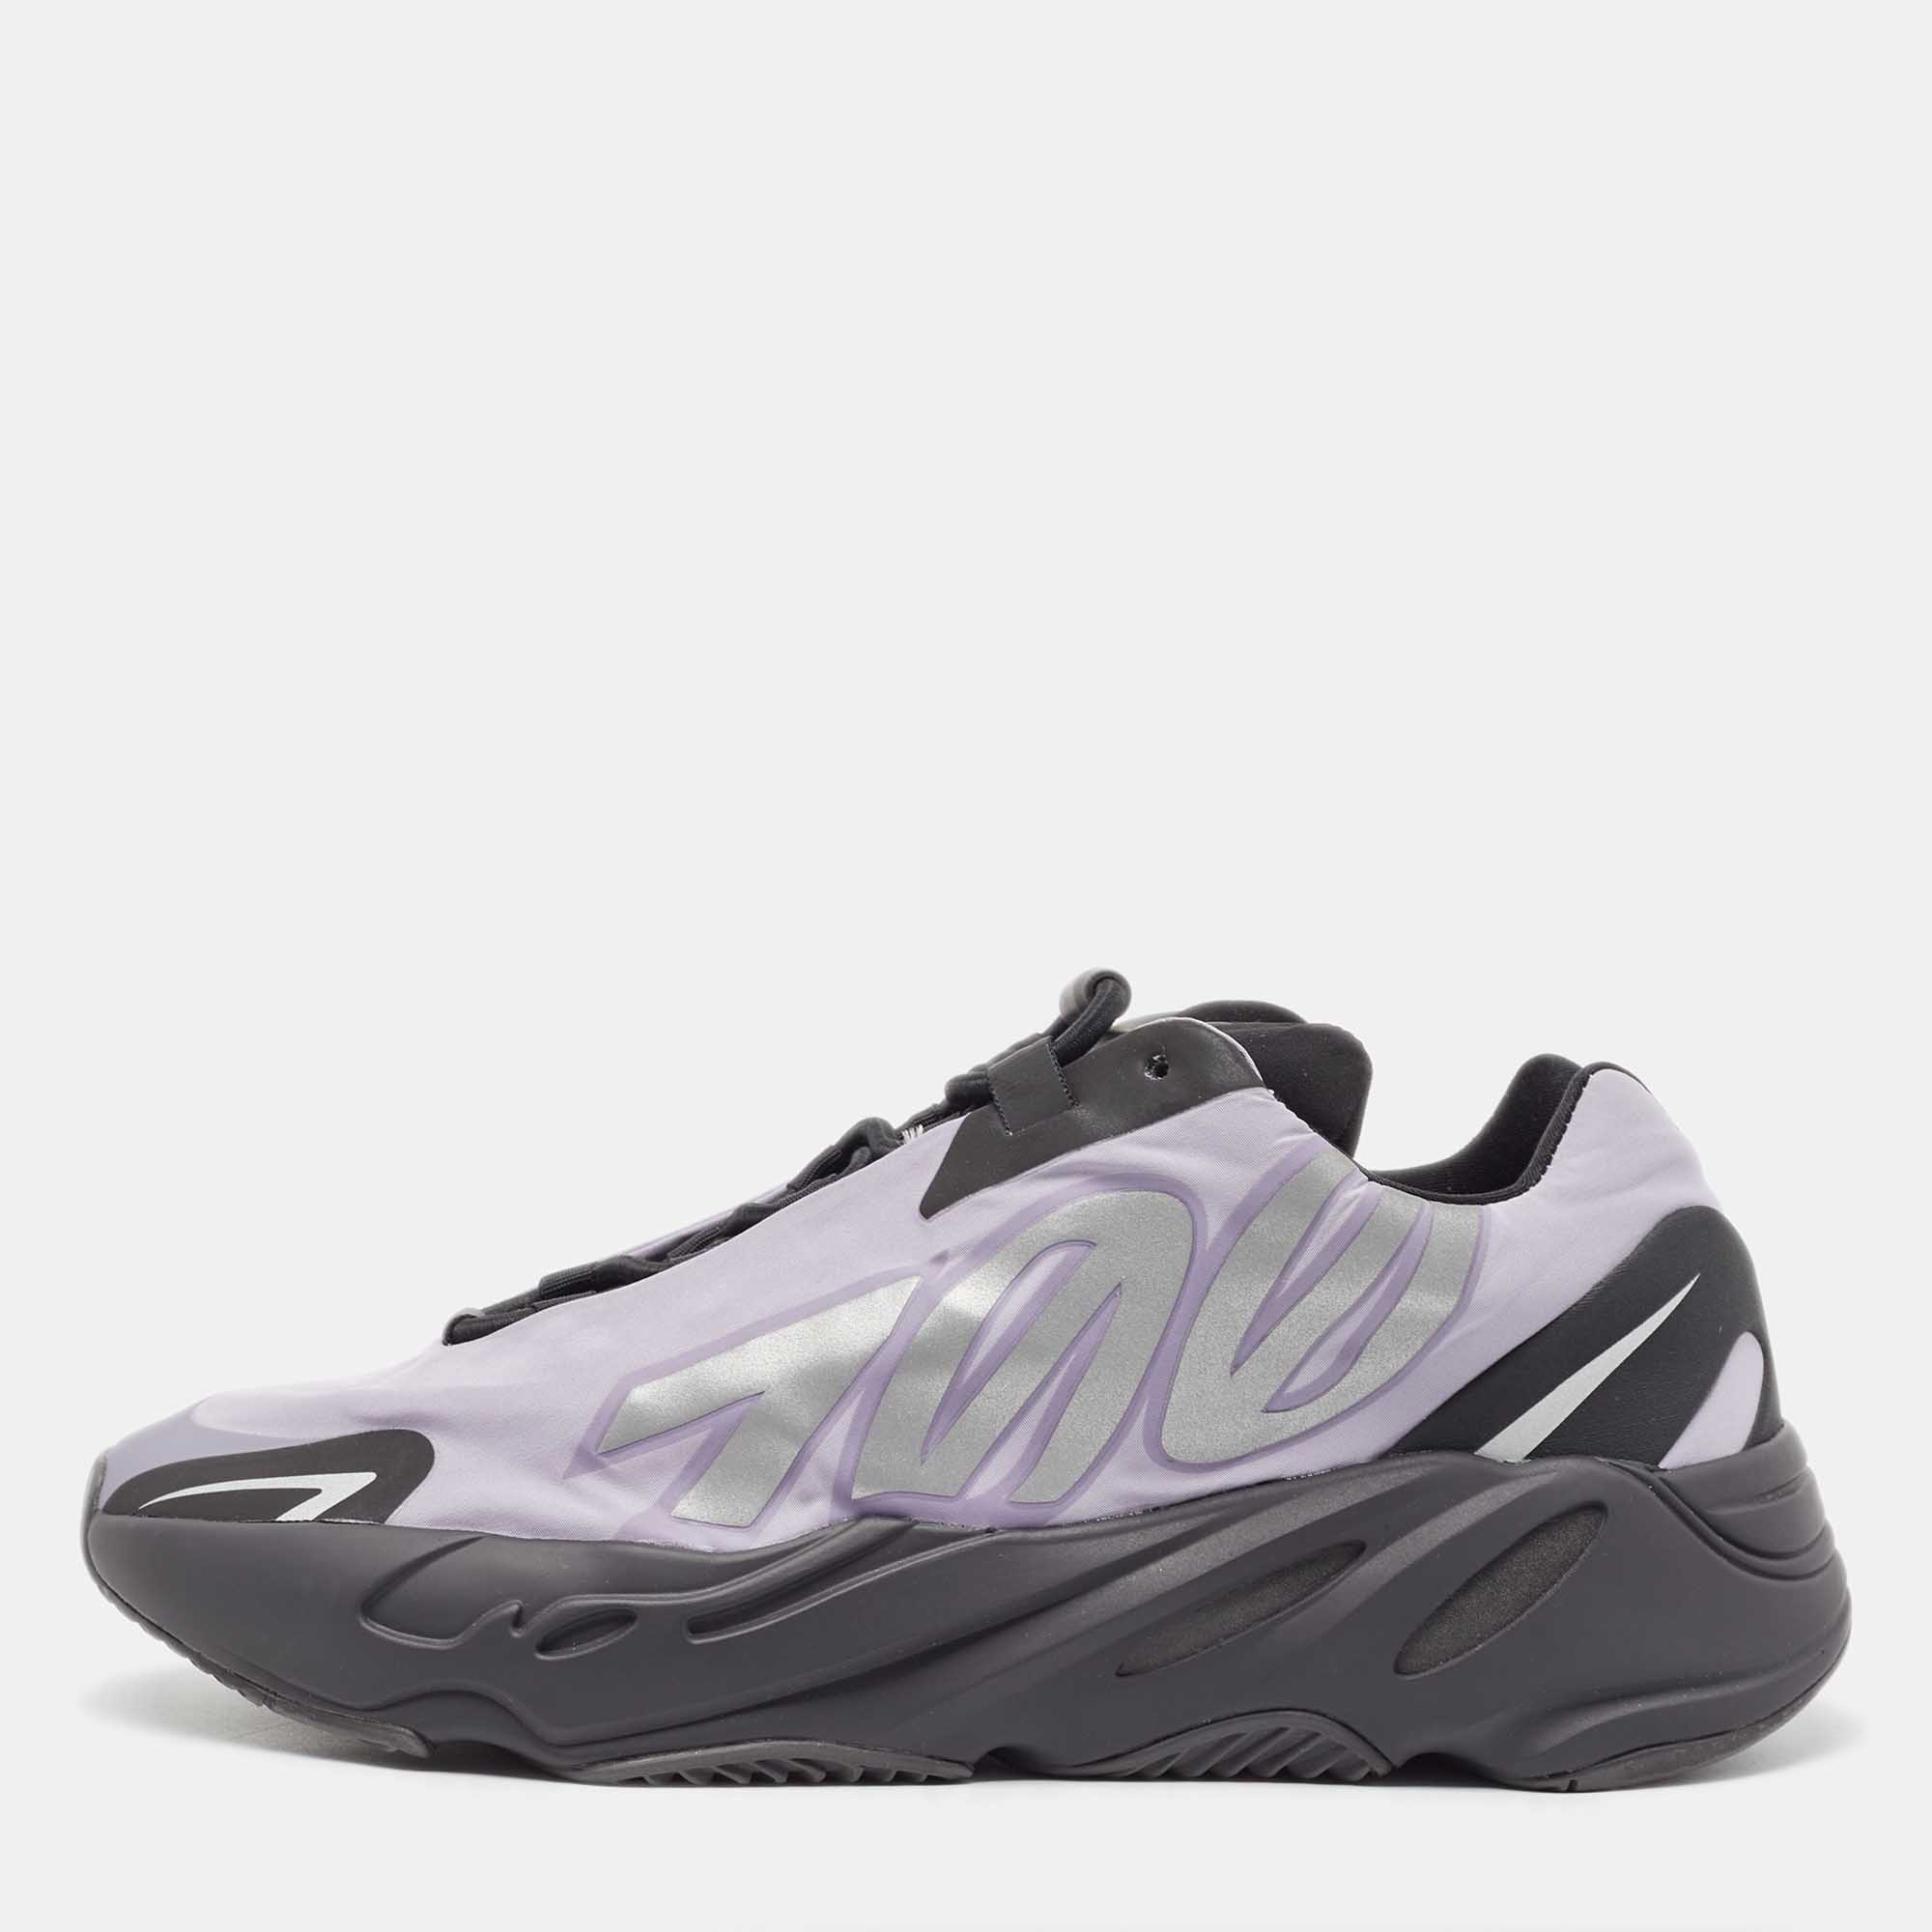 Yeezy x adidas black/lavender nylon boost 700 mnvn geode sneakers size 43.5